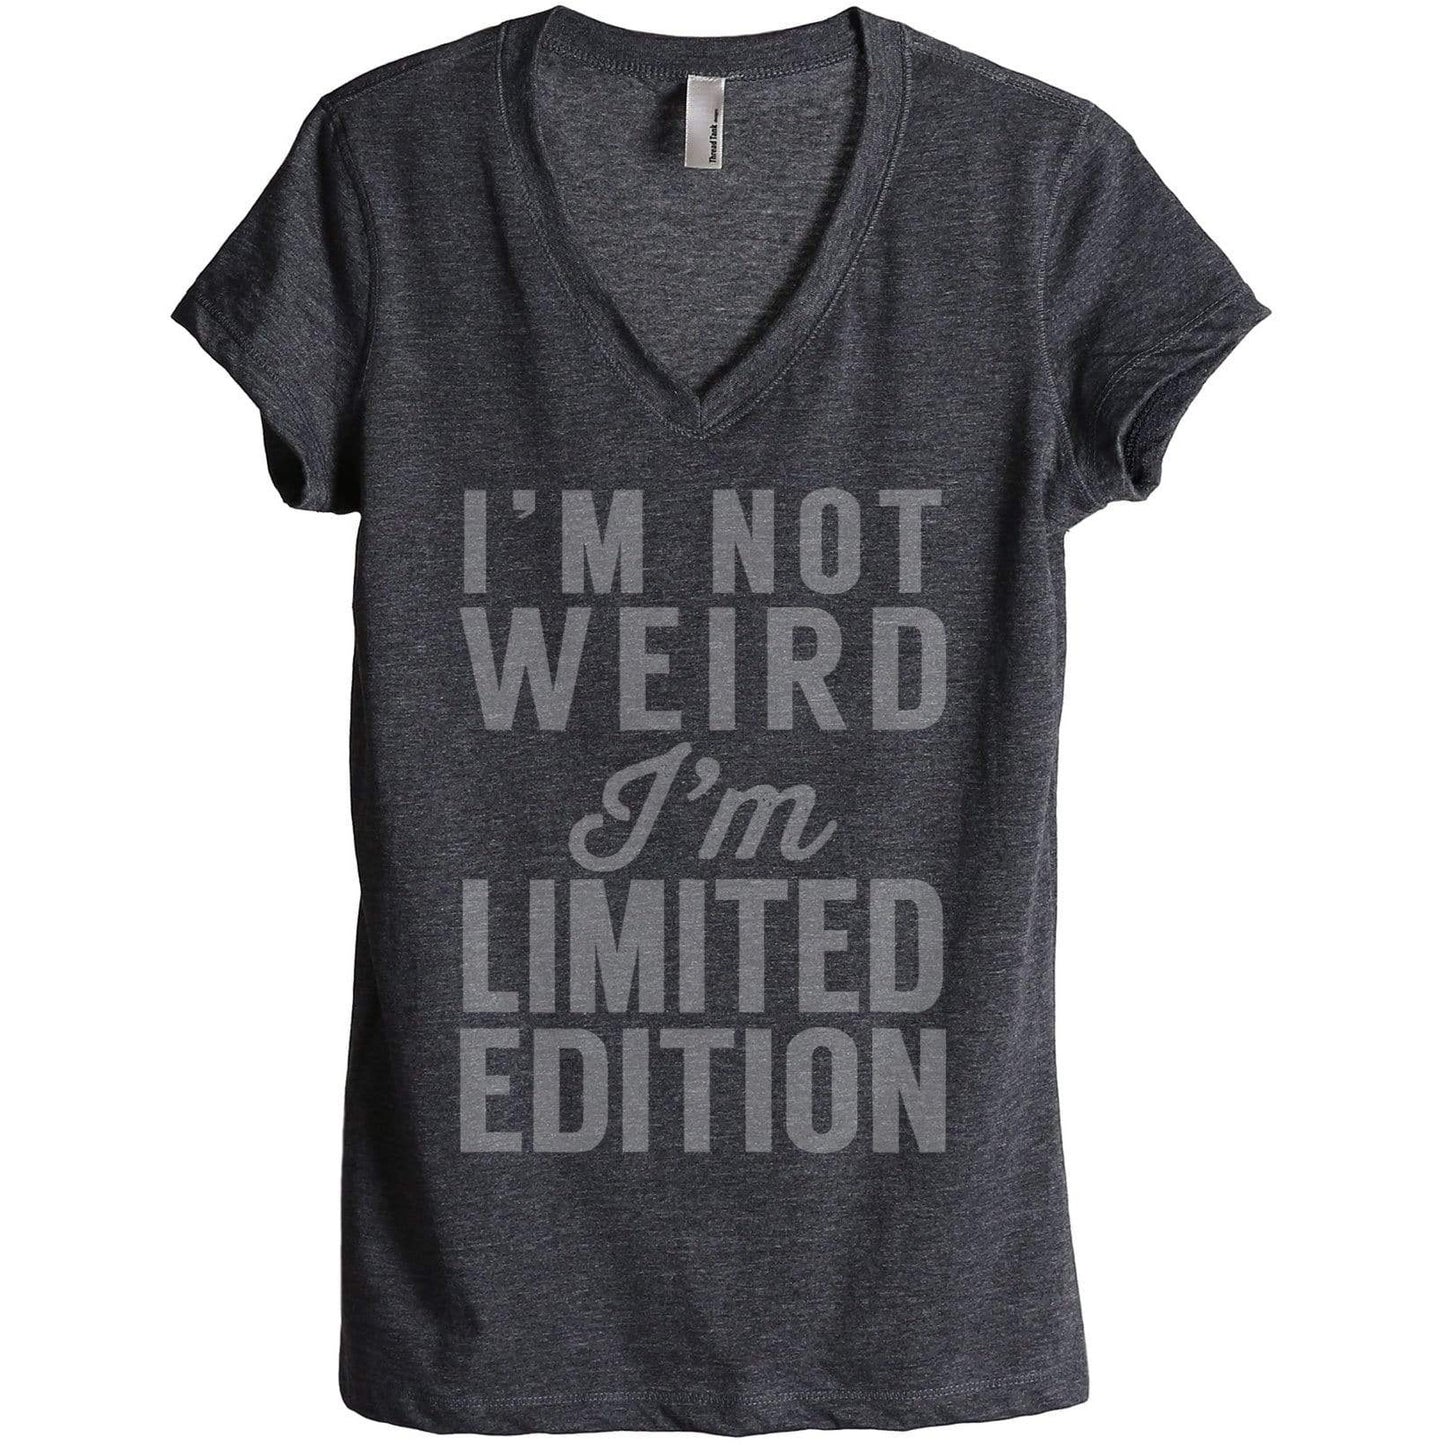 Im Not Weird Im Limited Edition Women V-Neck T-Shirt Tee Graphic Top ...